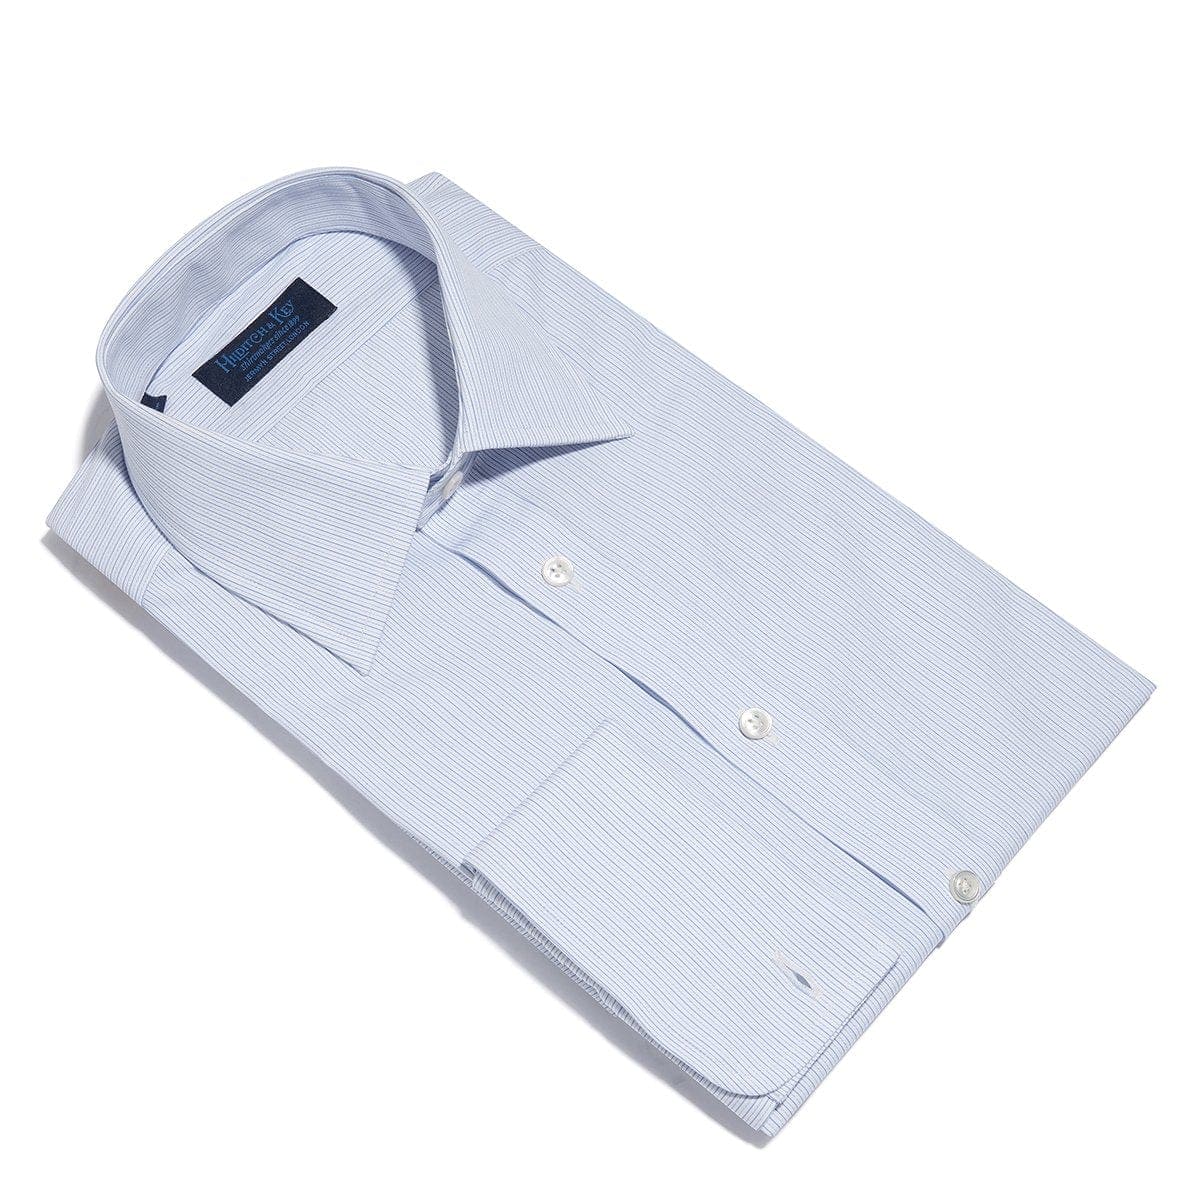 Contemporary Fit, Classic Collar, Double Cuff Shirt in a Blue & White Stripe Poplin Cotton